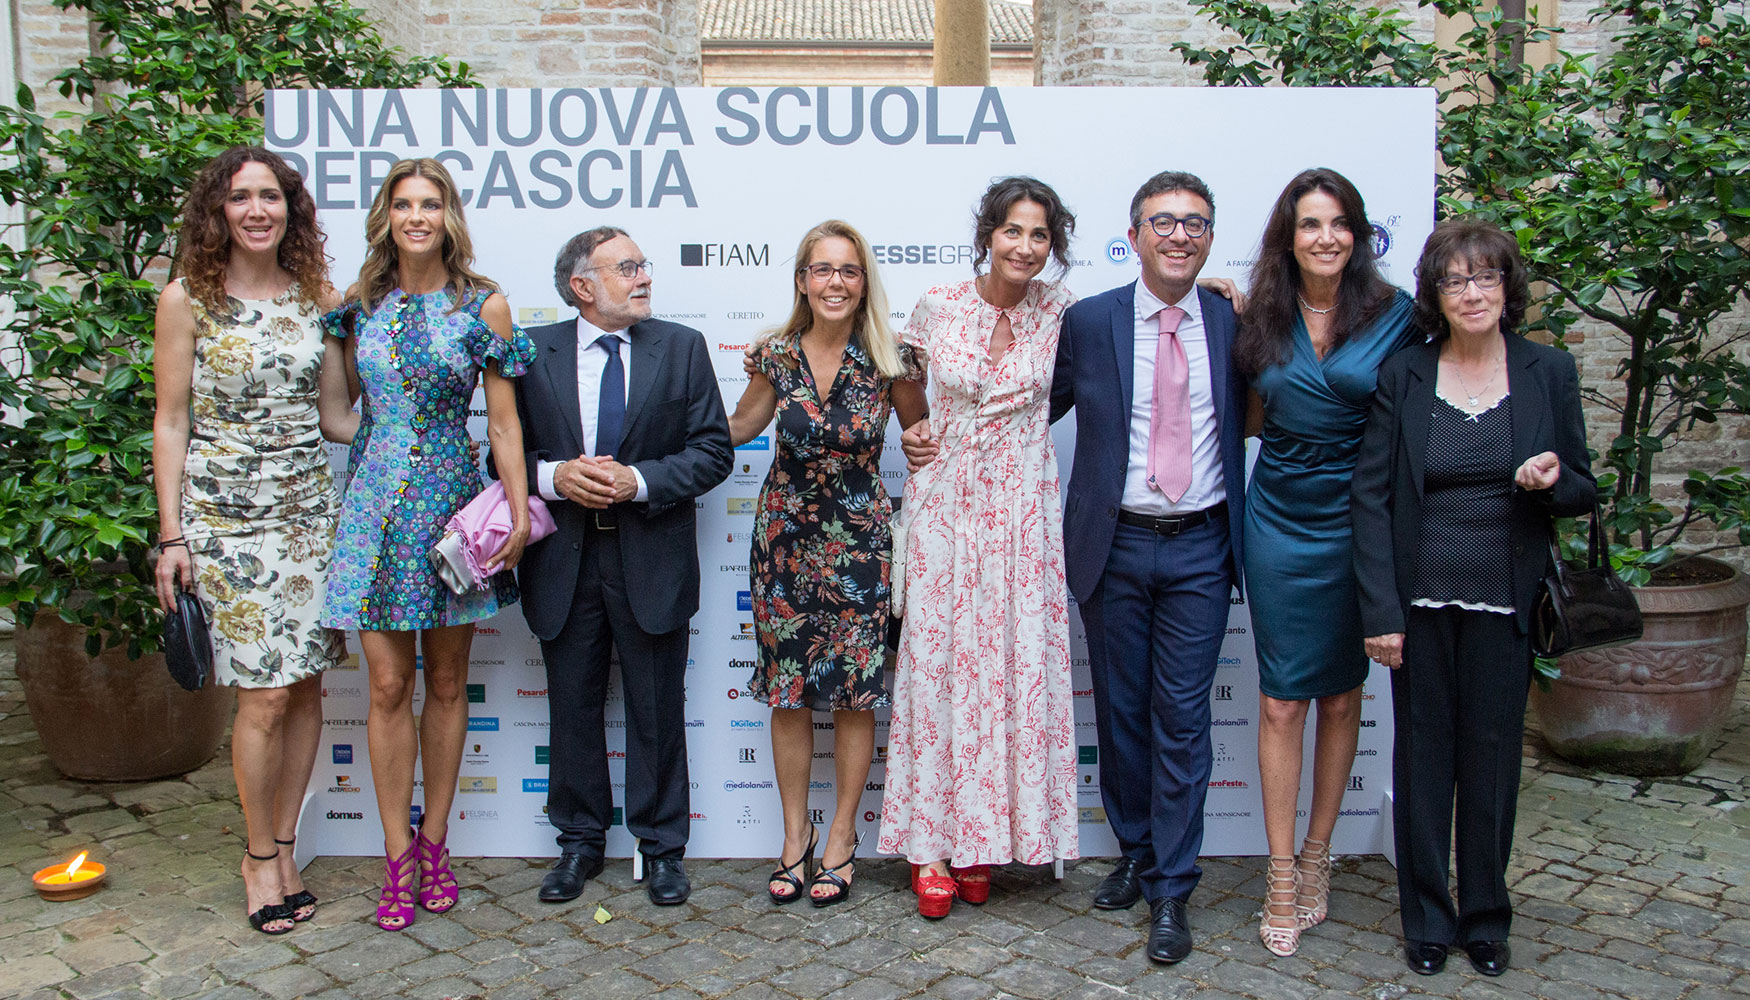 A travs de esta cena solidaria se ha conseguido donar 70.000 euros a la Fondazione Rava N.P.H. Italia